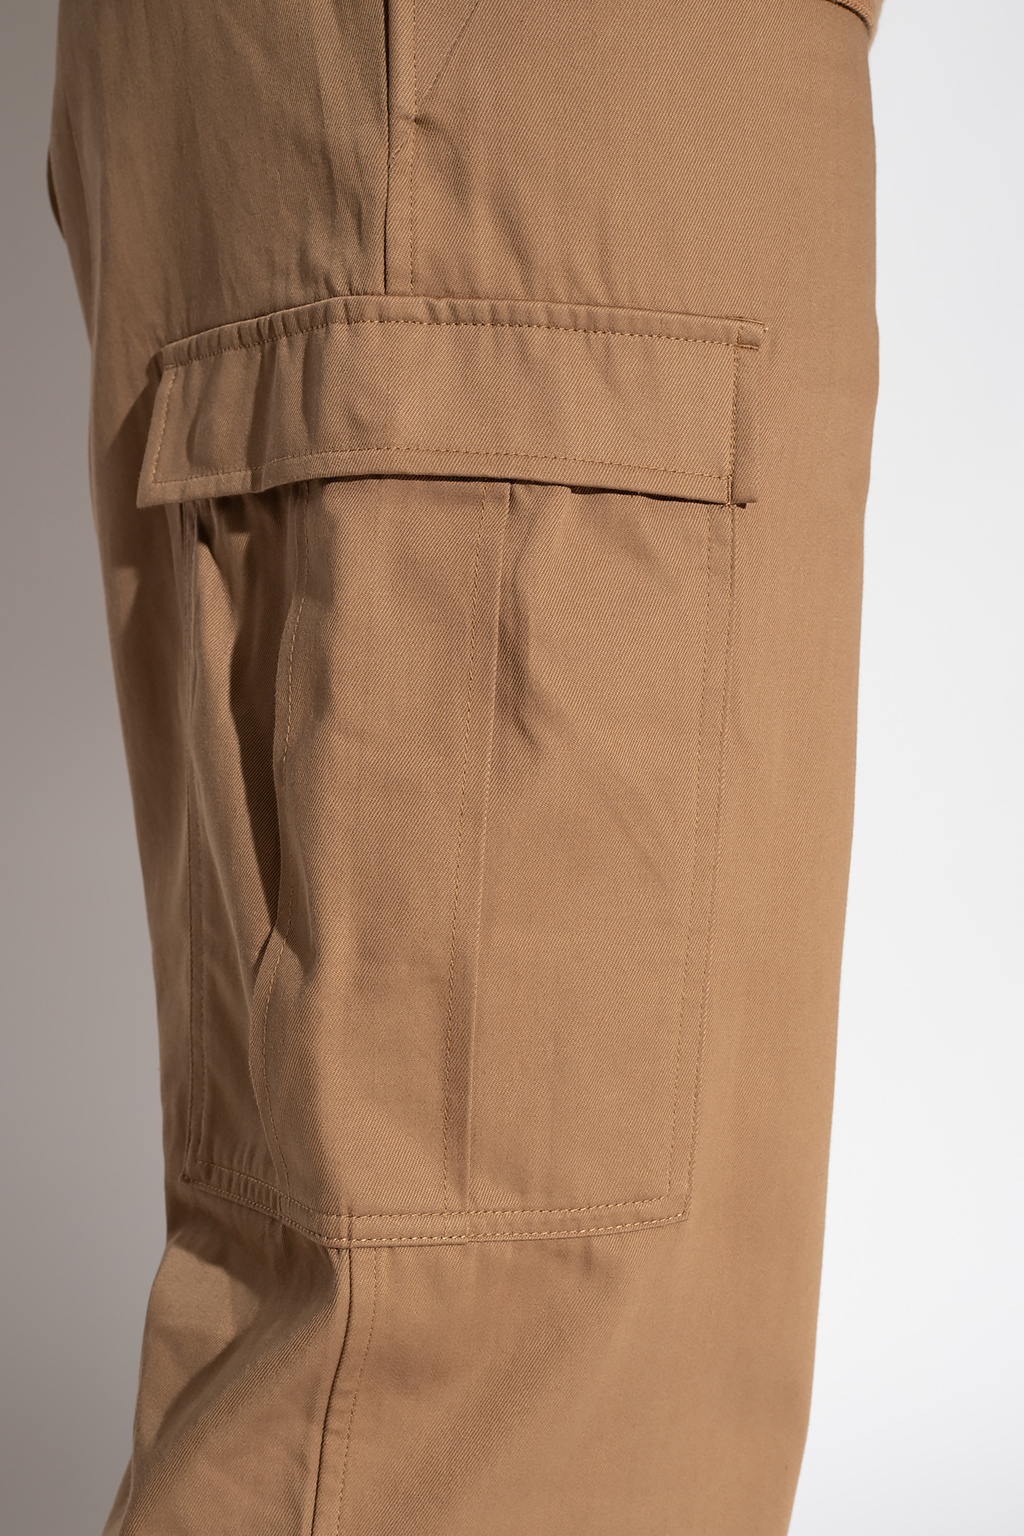 Burberry ‘Capleton’ check-print trousers